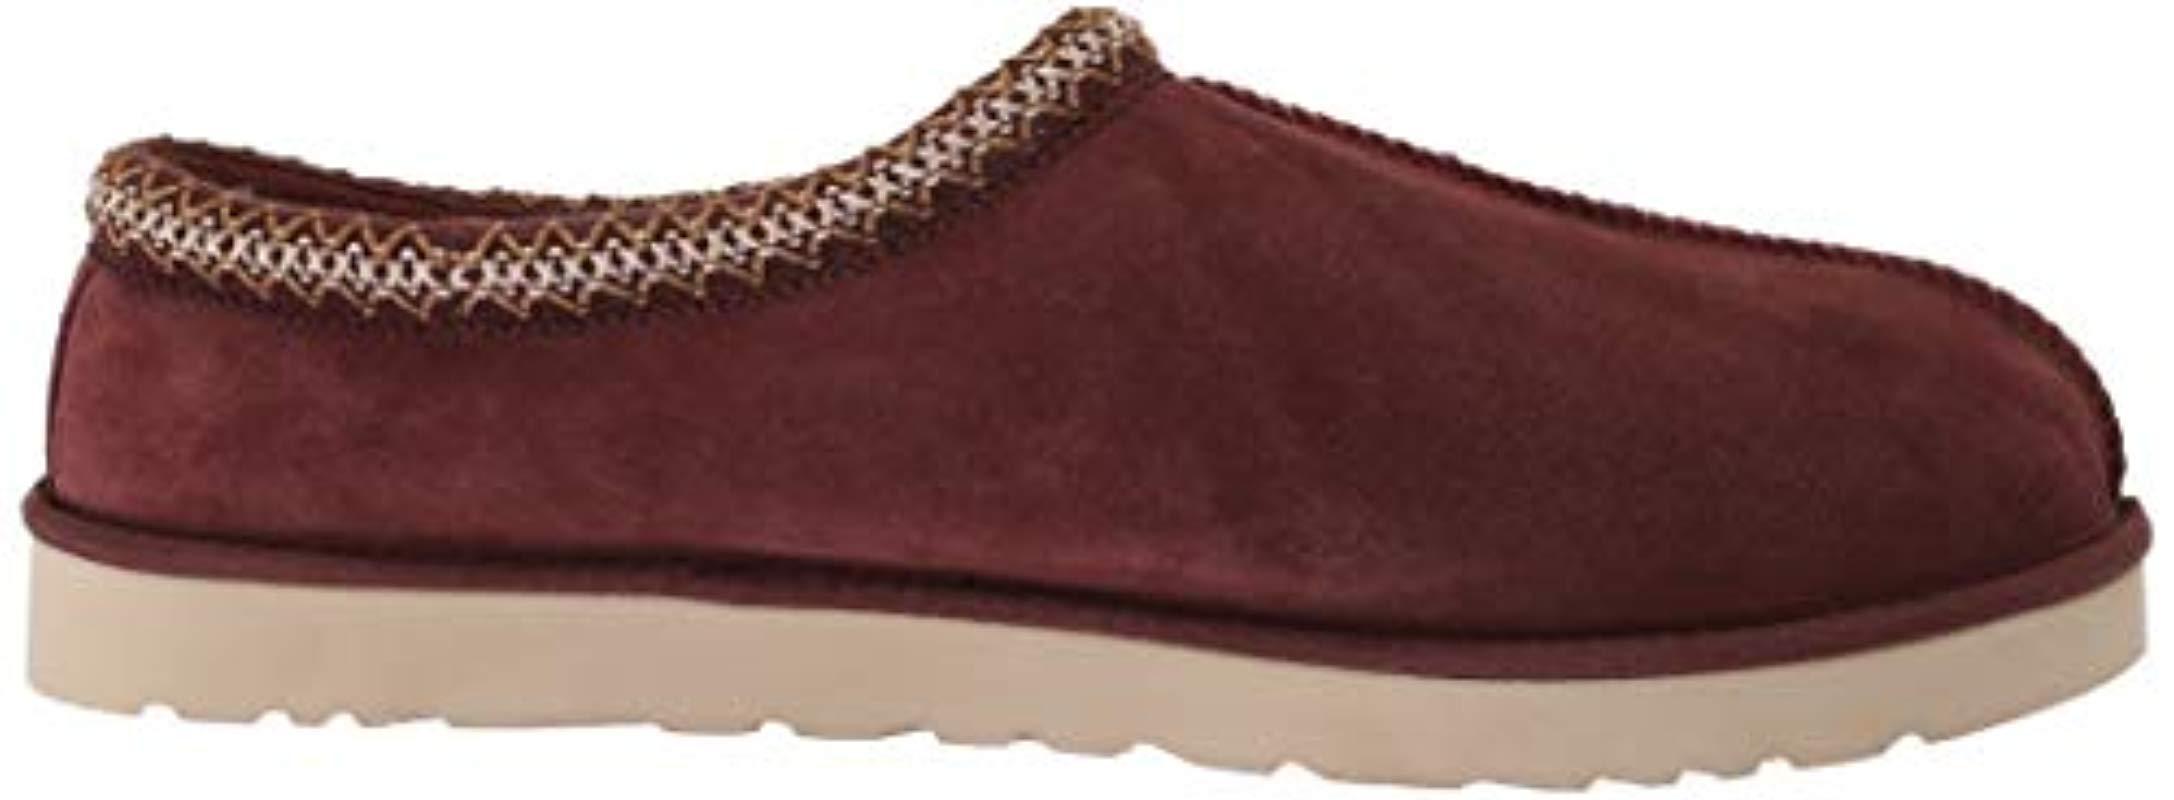 burgundy ugg slippers